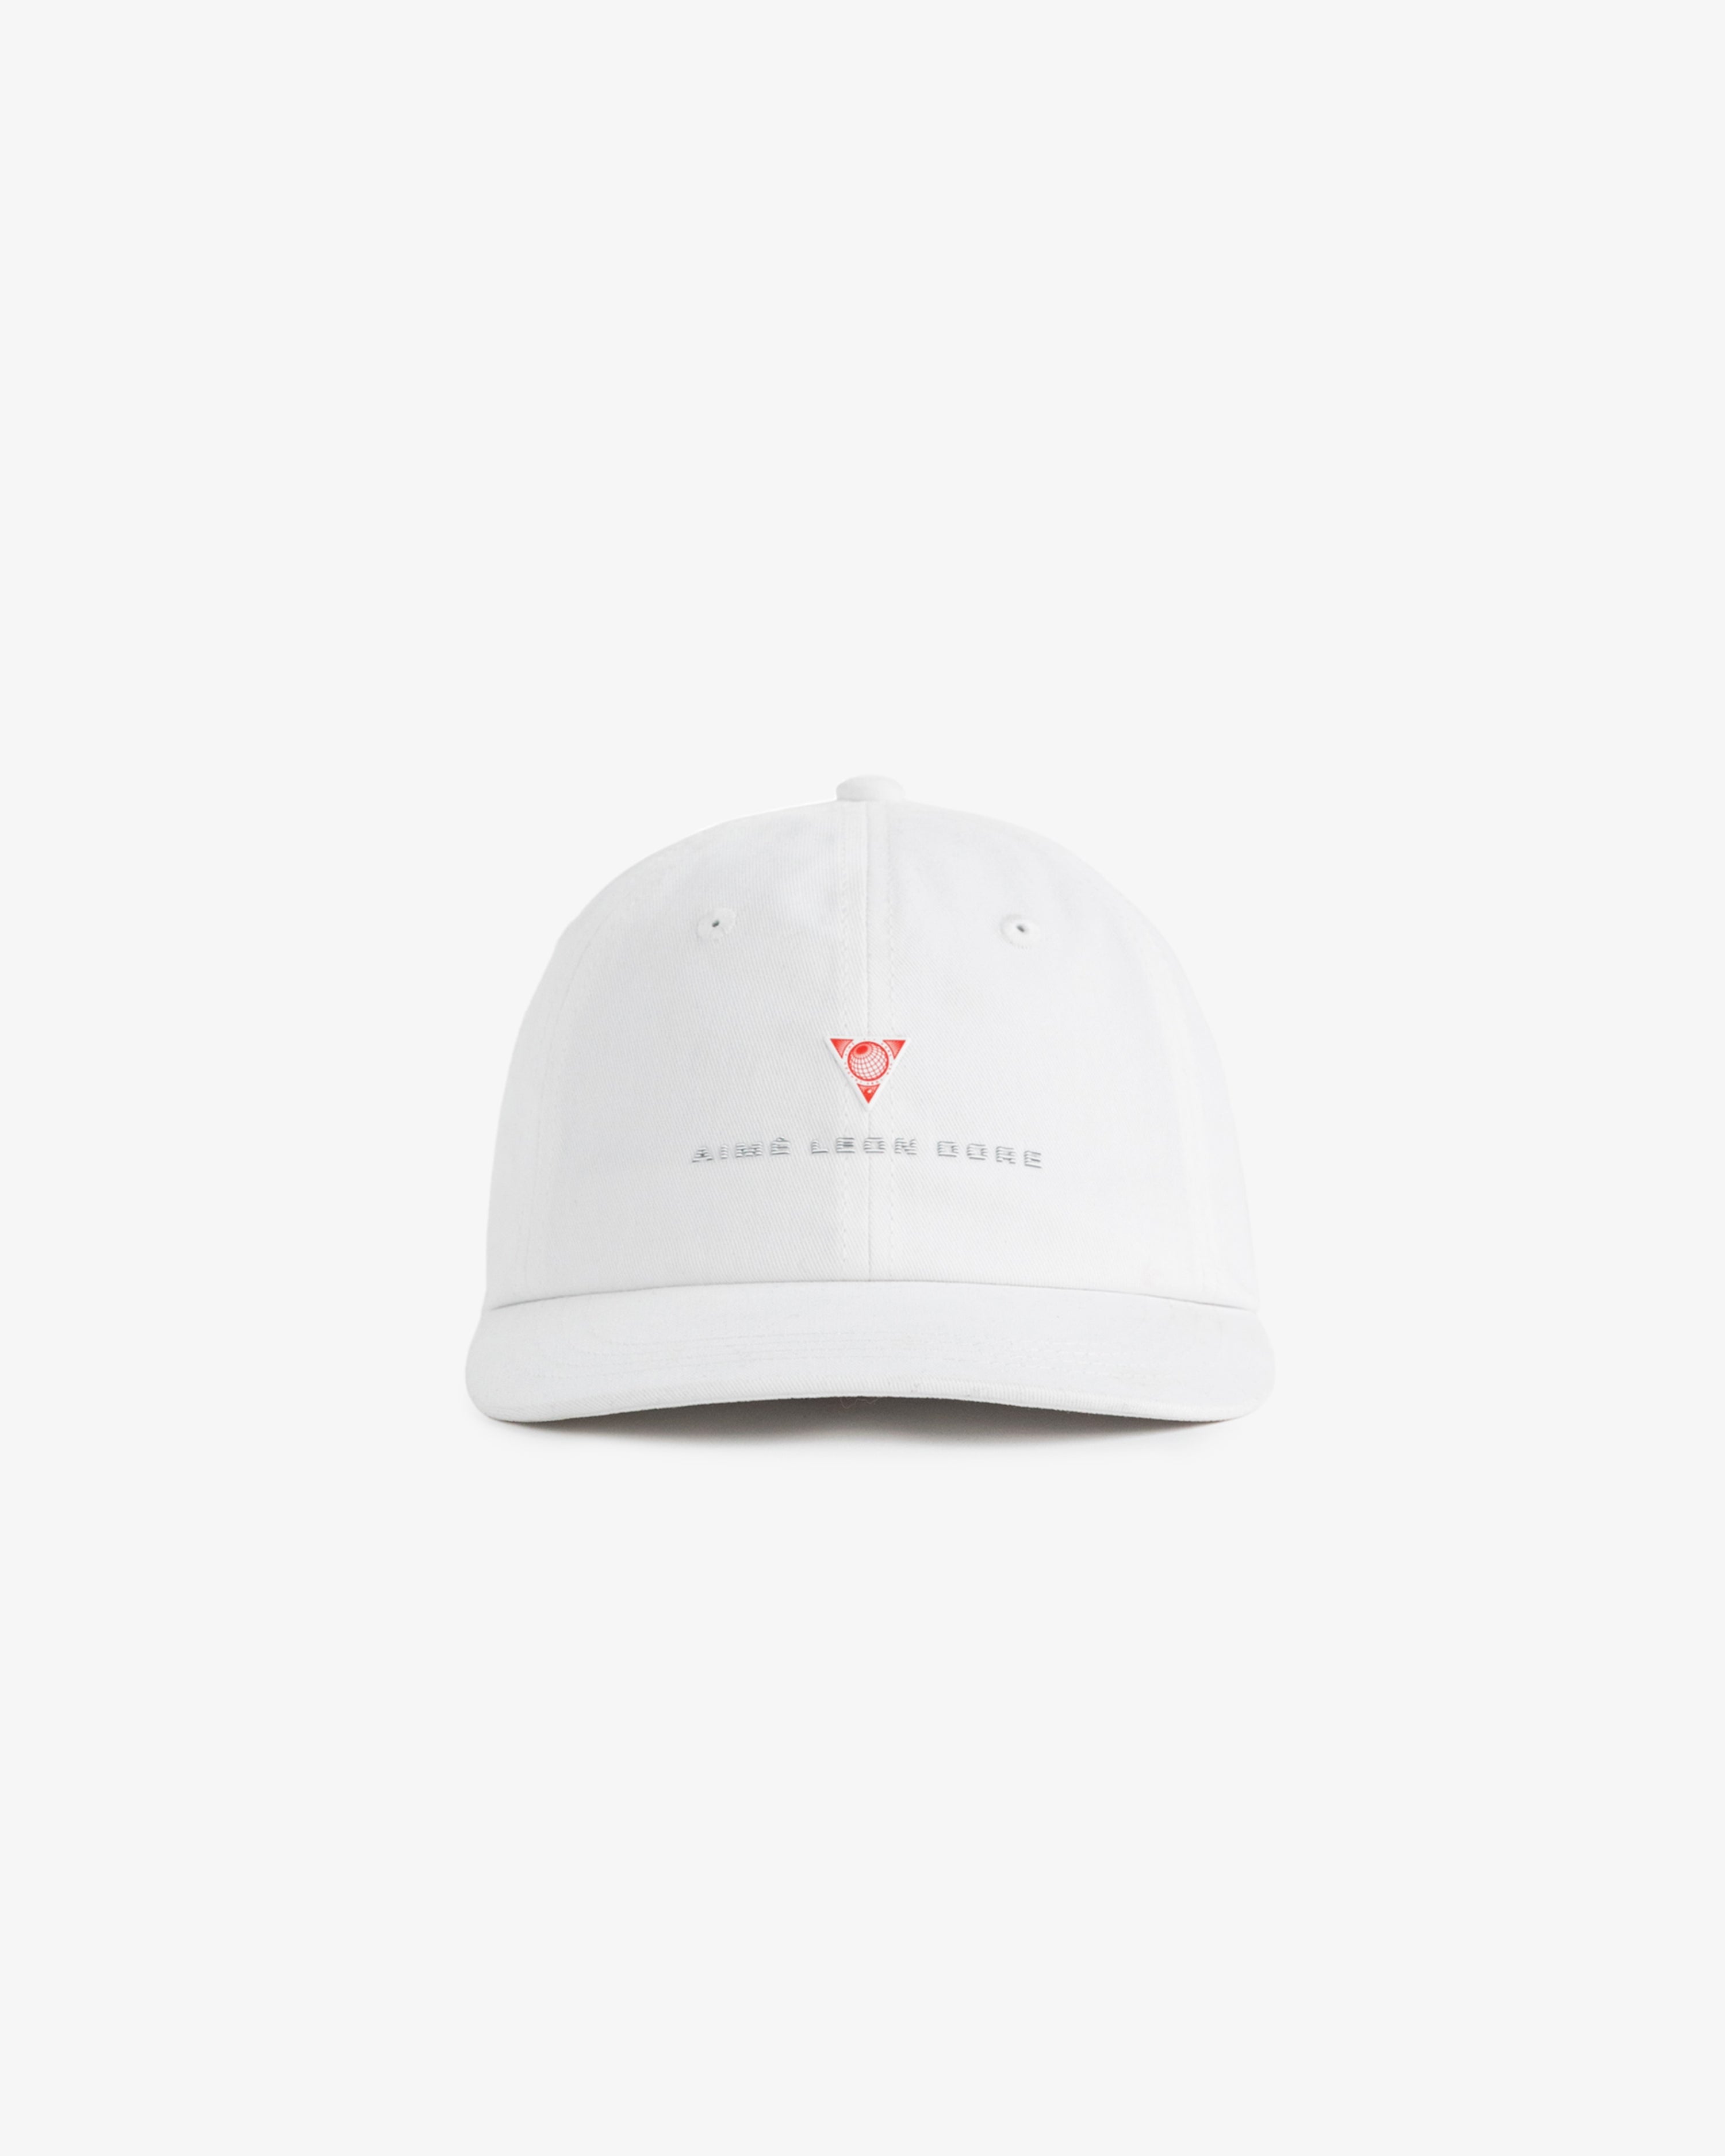 ALD / New Balance Chino Logo Hat